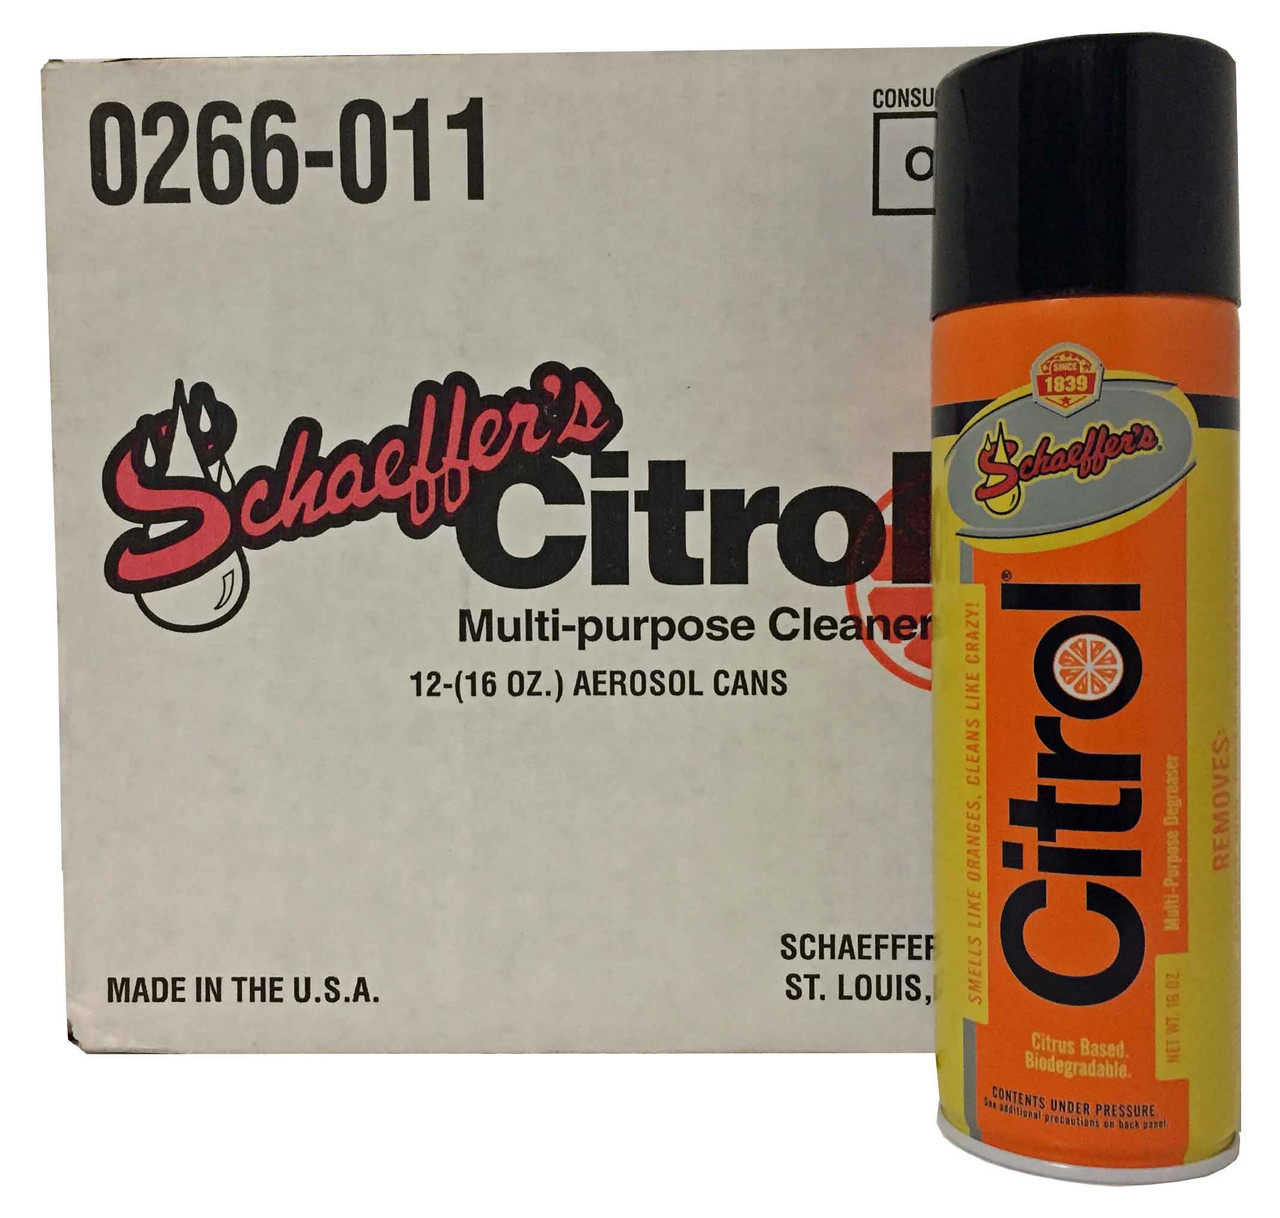 Citrol Citrus Degreaser - 16oz Spray Can